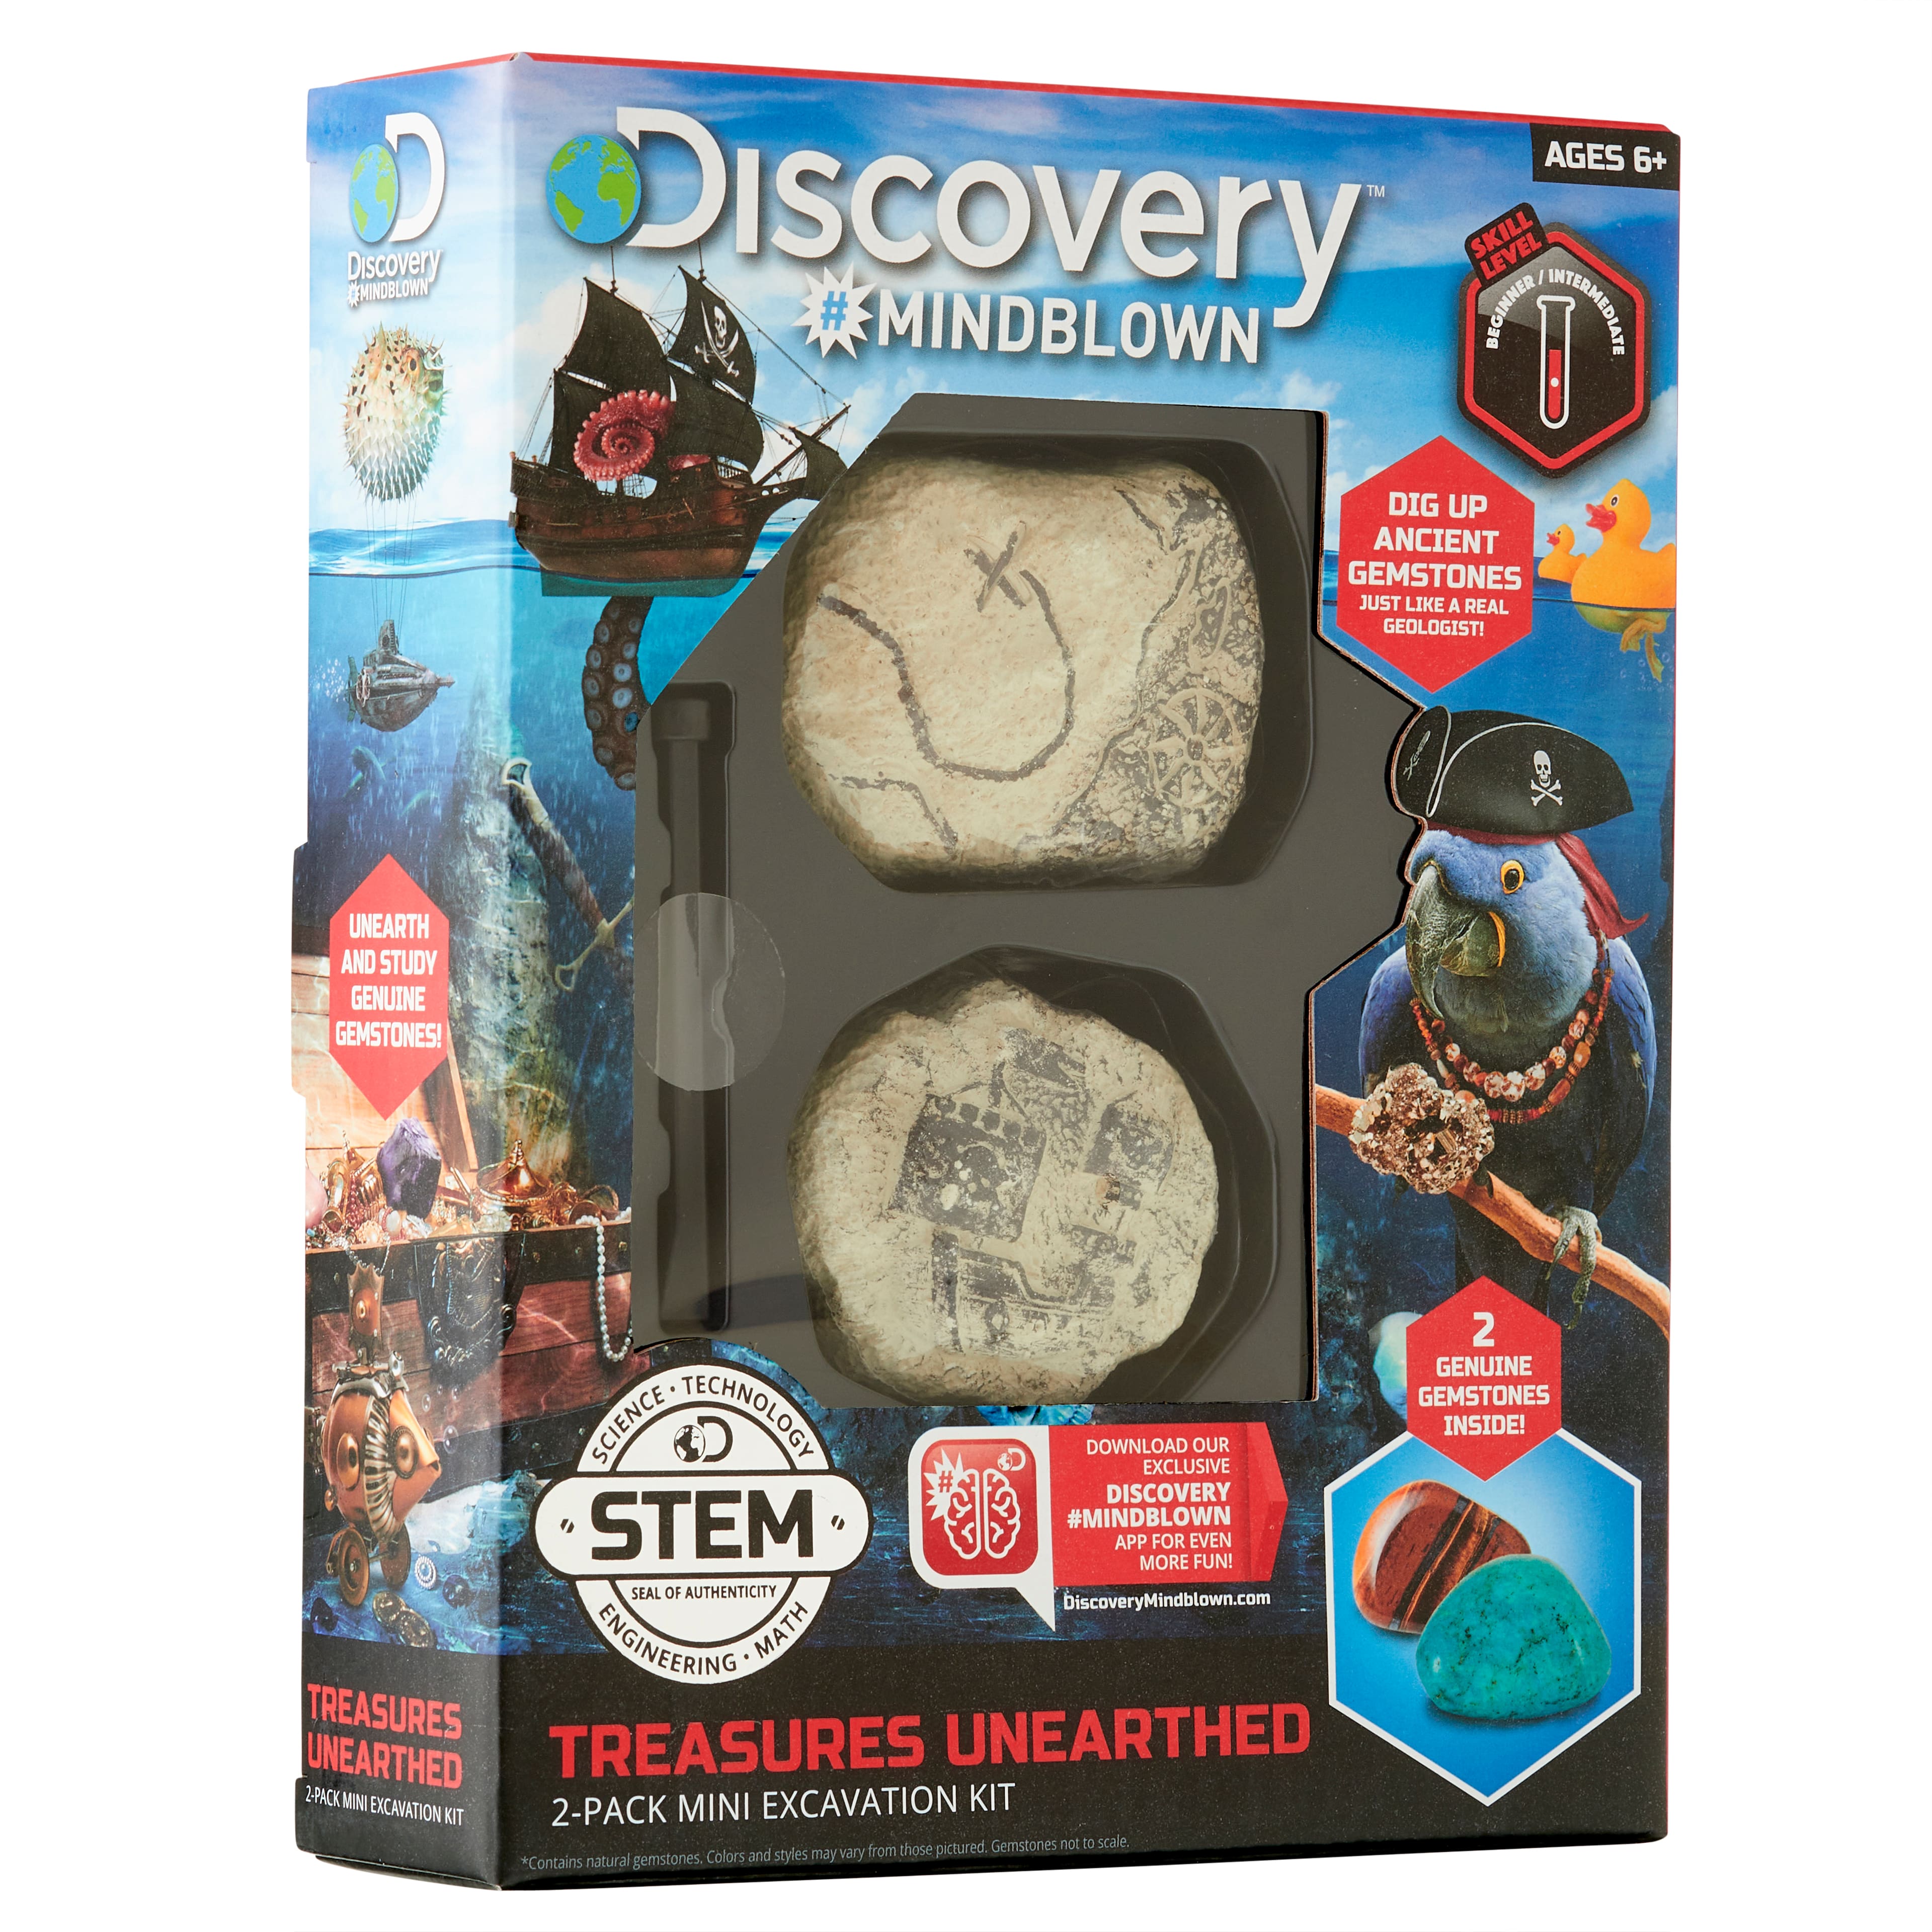 Discovery&#x2122; #Mindblown Mystery Dig Kits